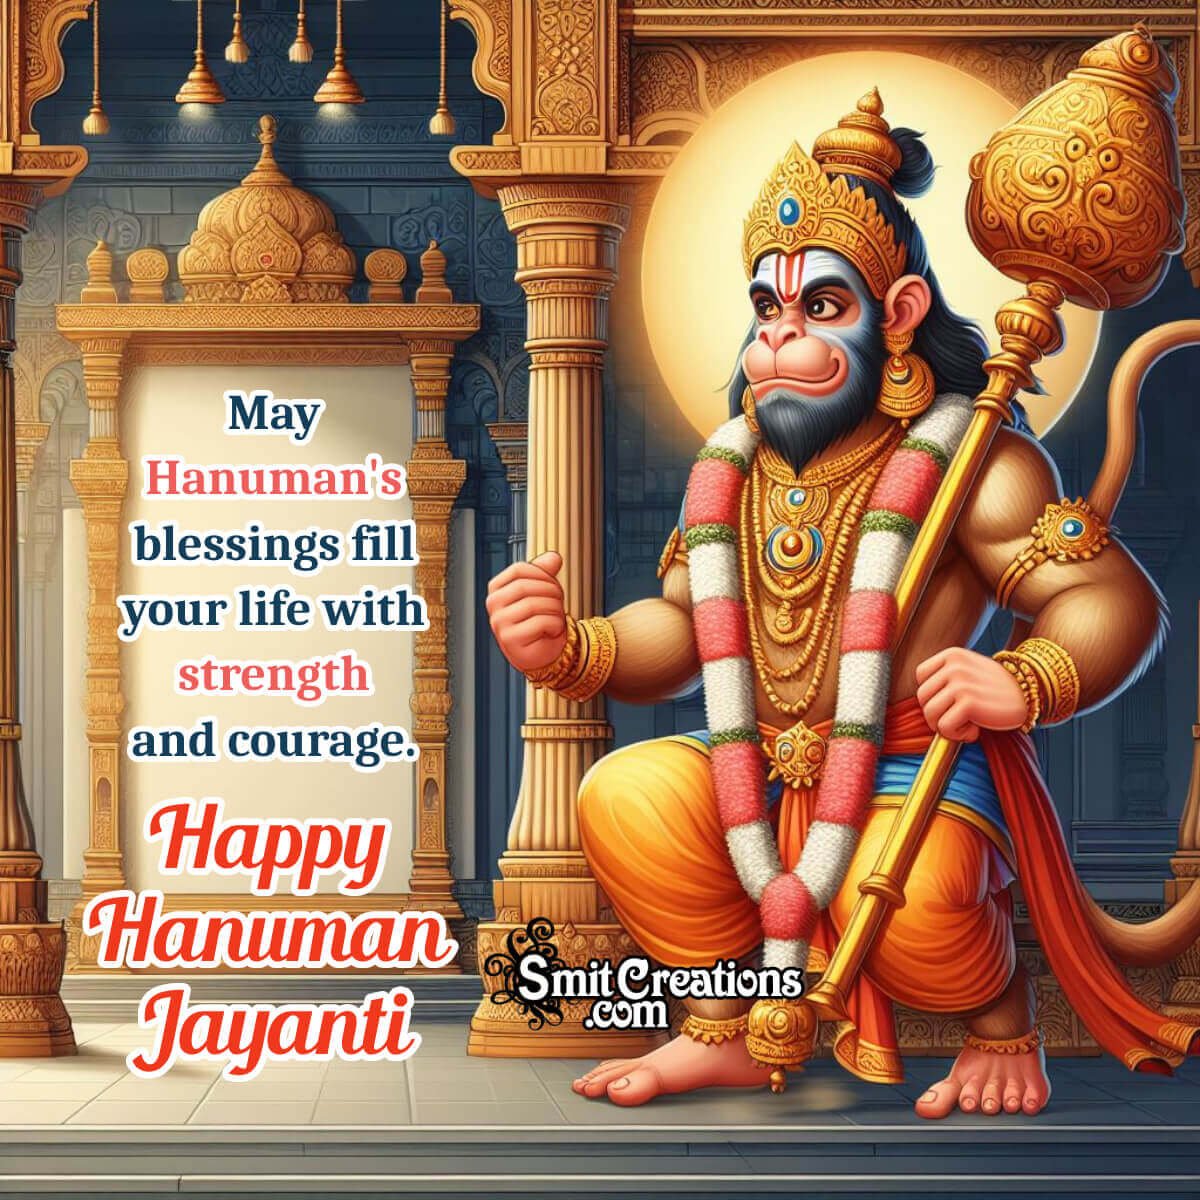 Happy Hanuman Jayanti Message Image